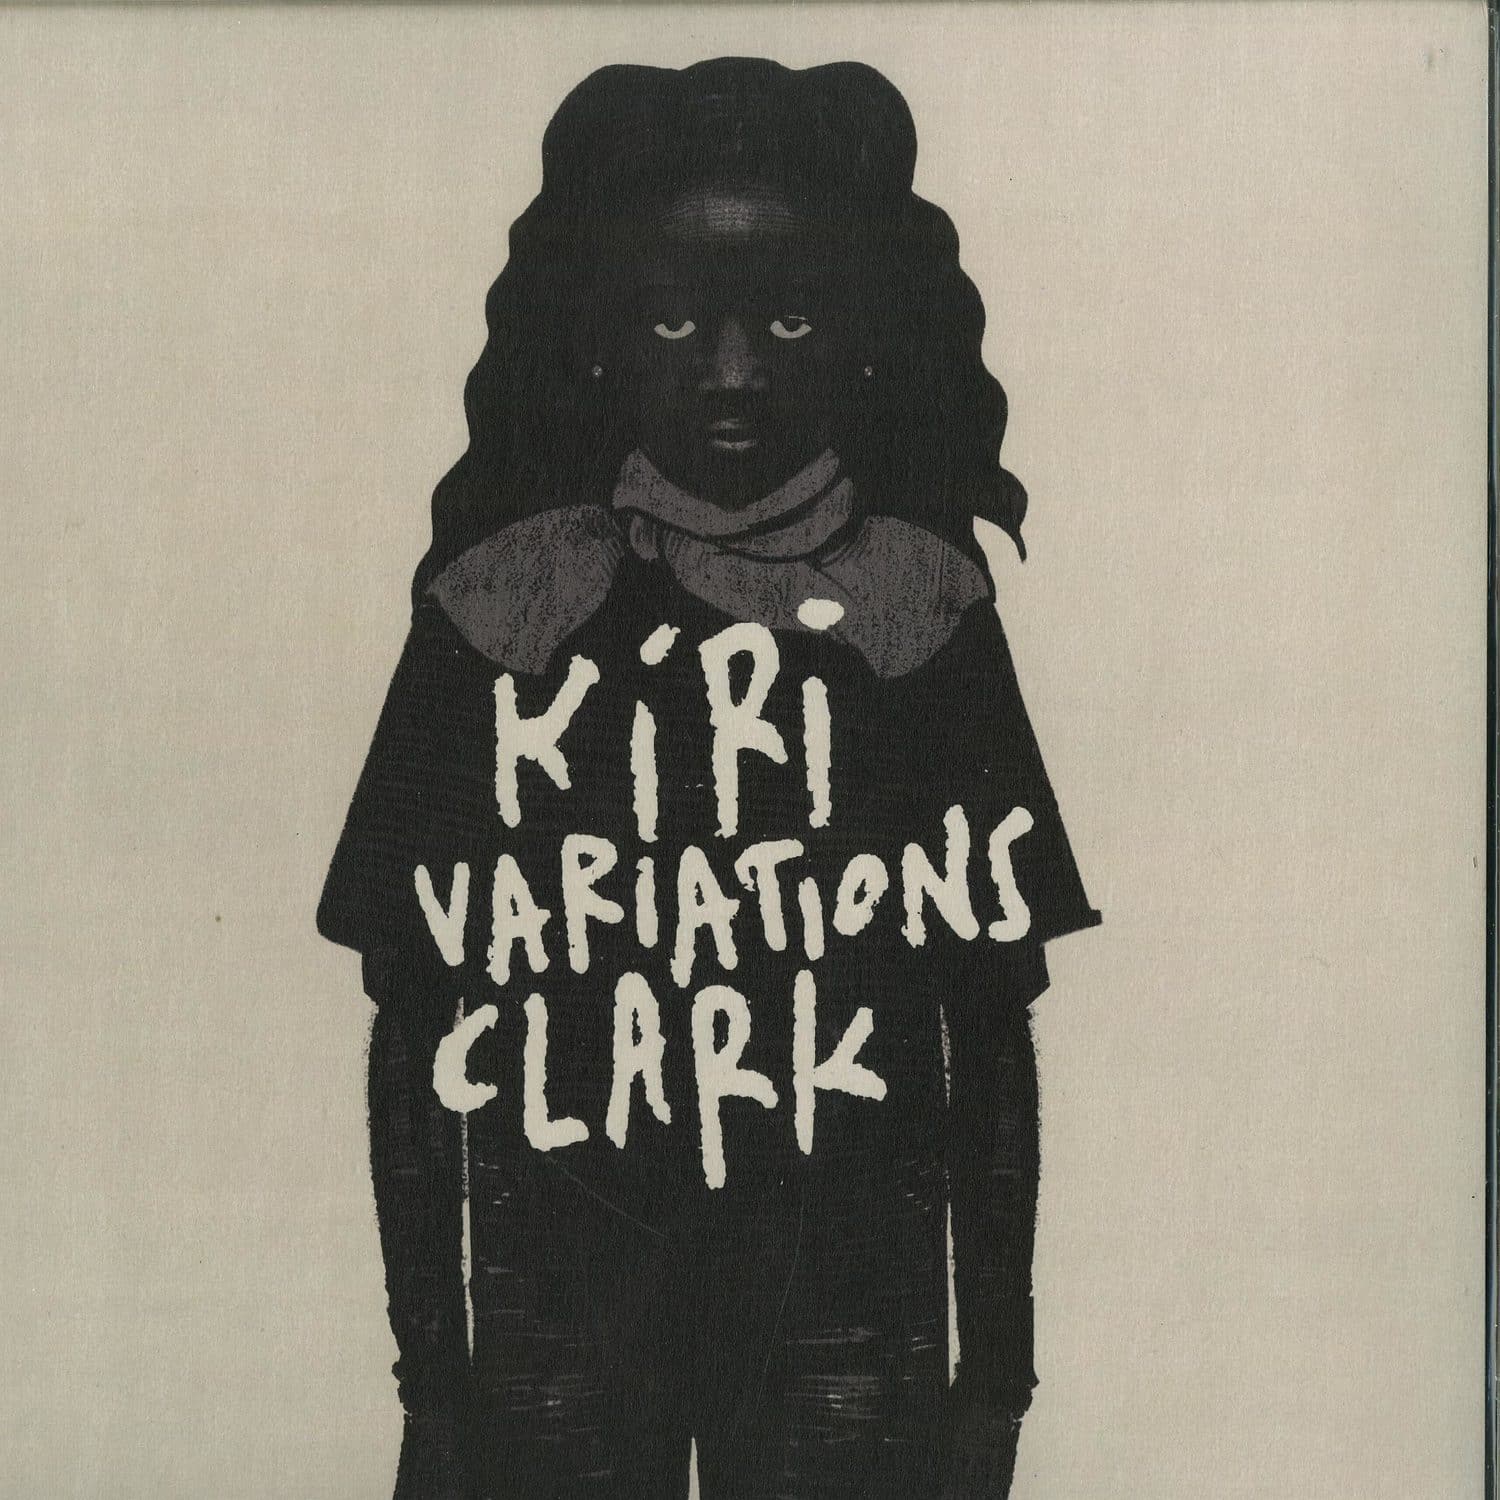 Clark - KIRI VARIATIONS 